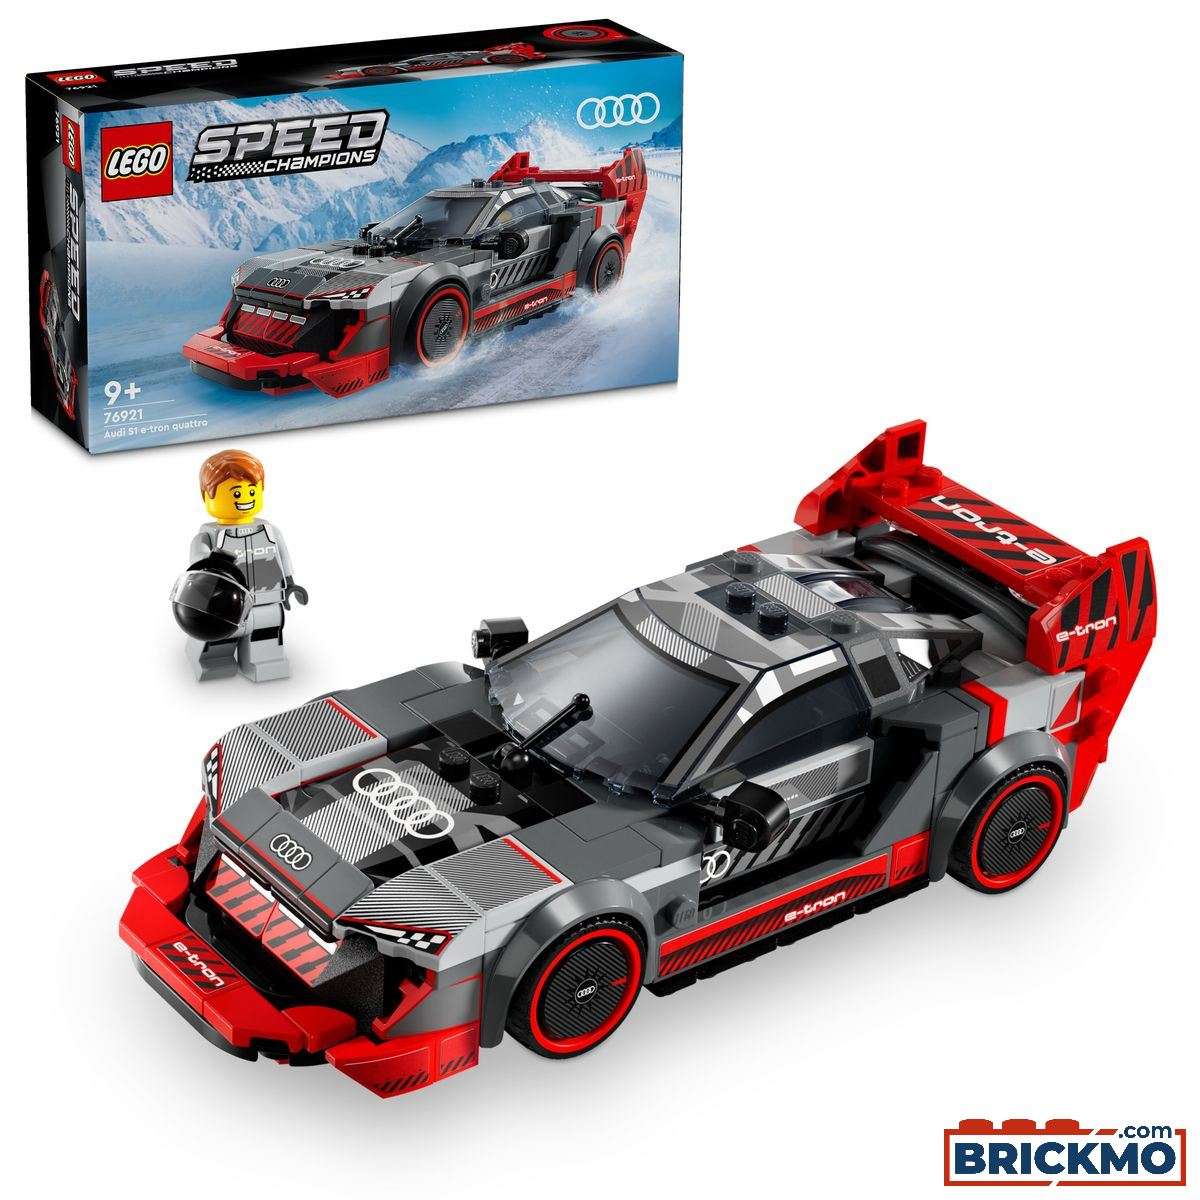 LEGO Speed Champions 76921 Audi S1 e-tron quattro Rennwagen 76921